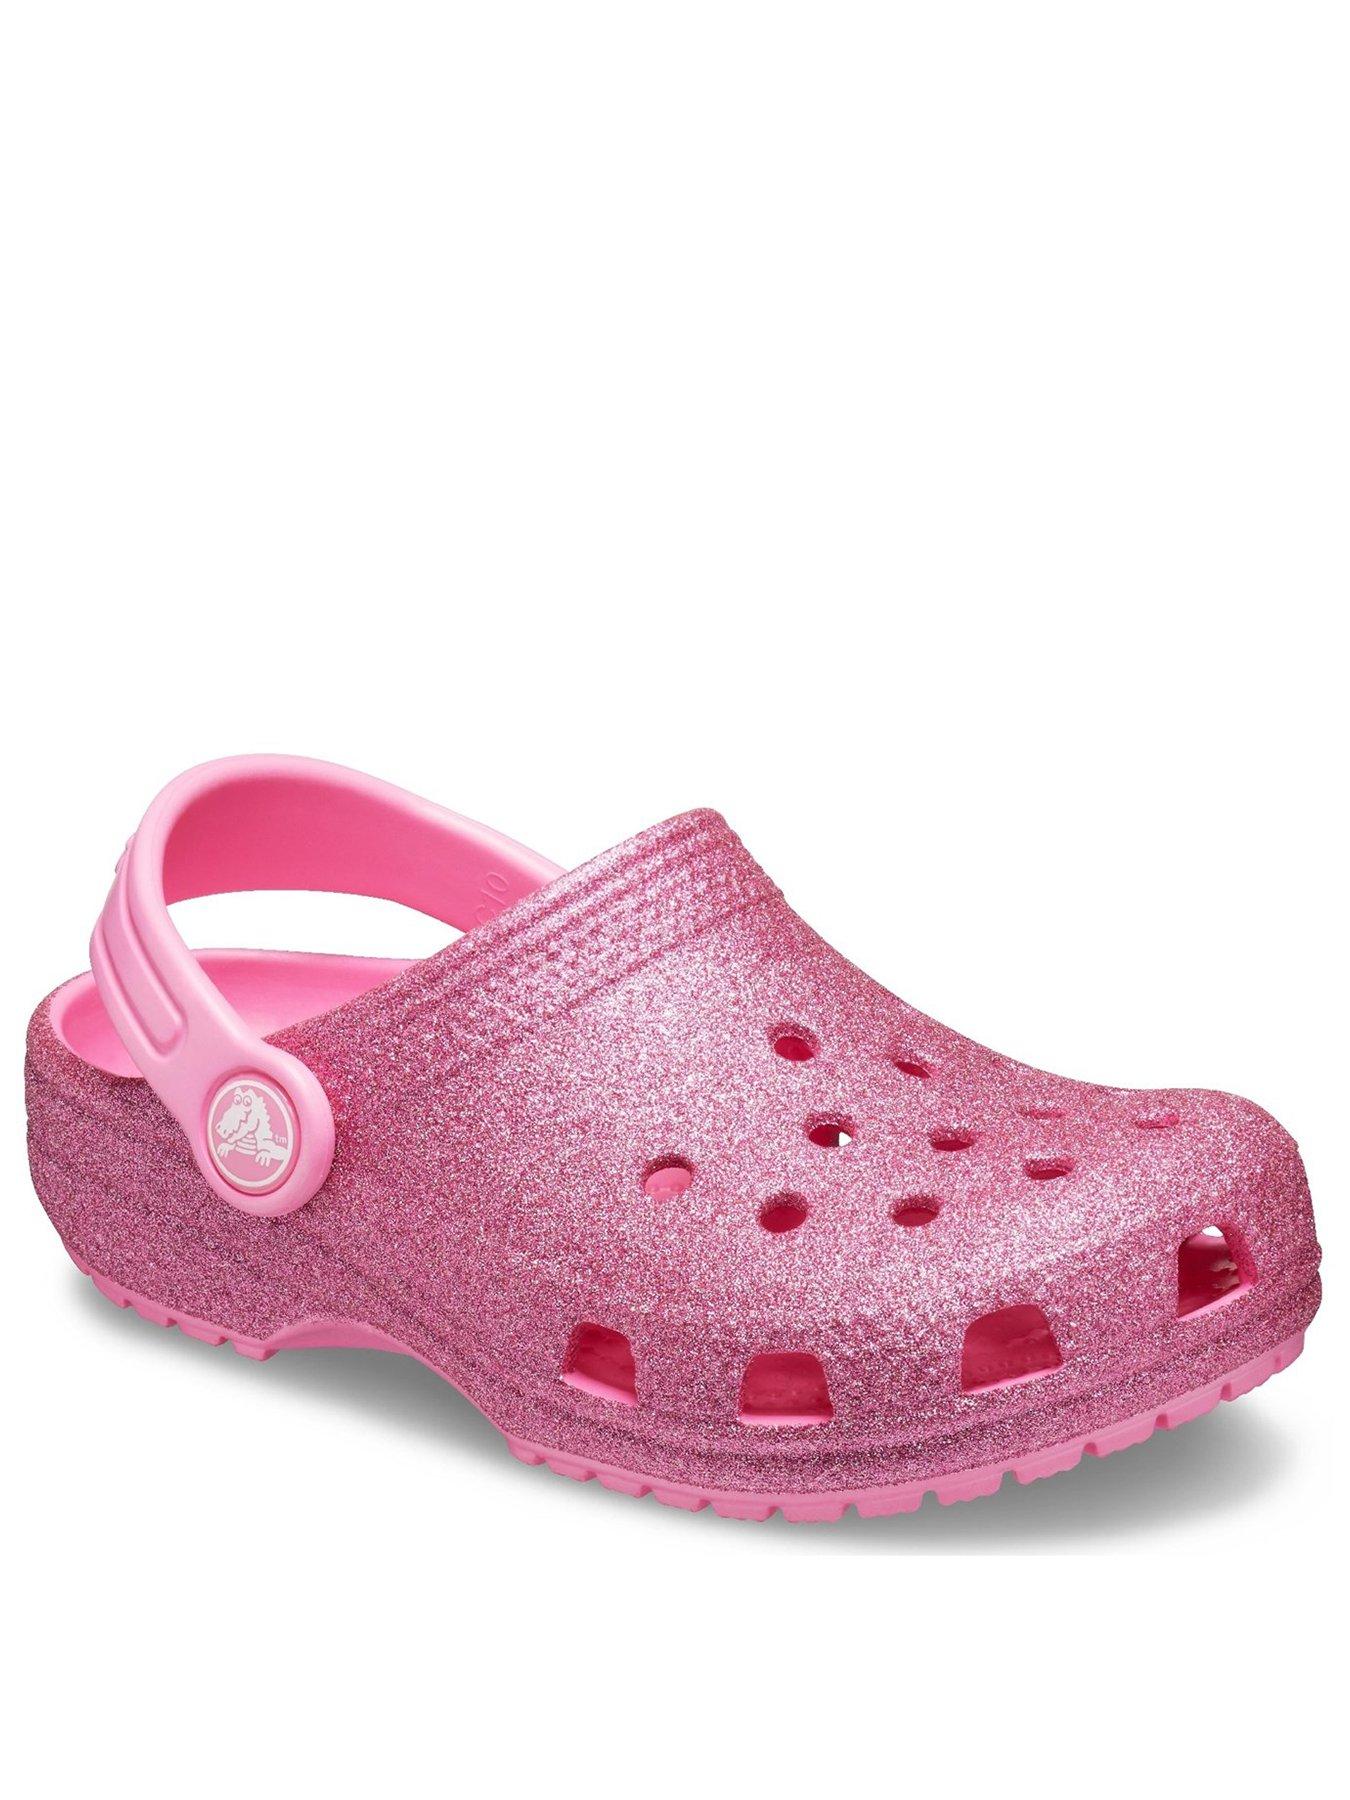 girls crocs uk